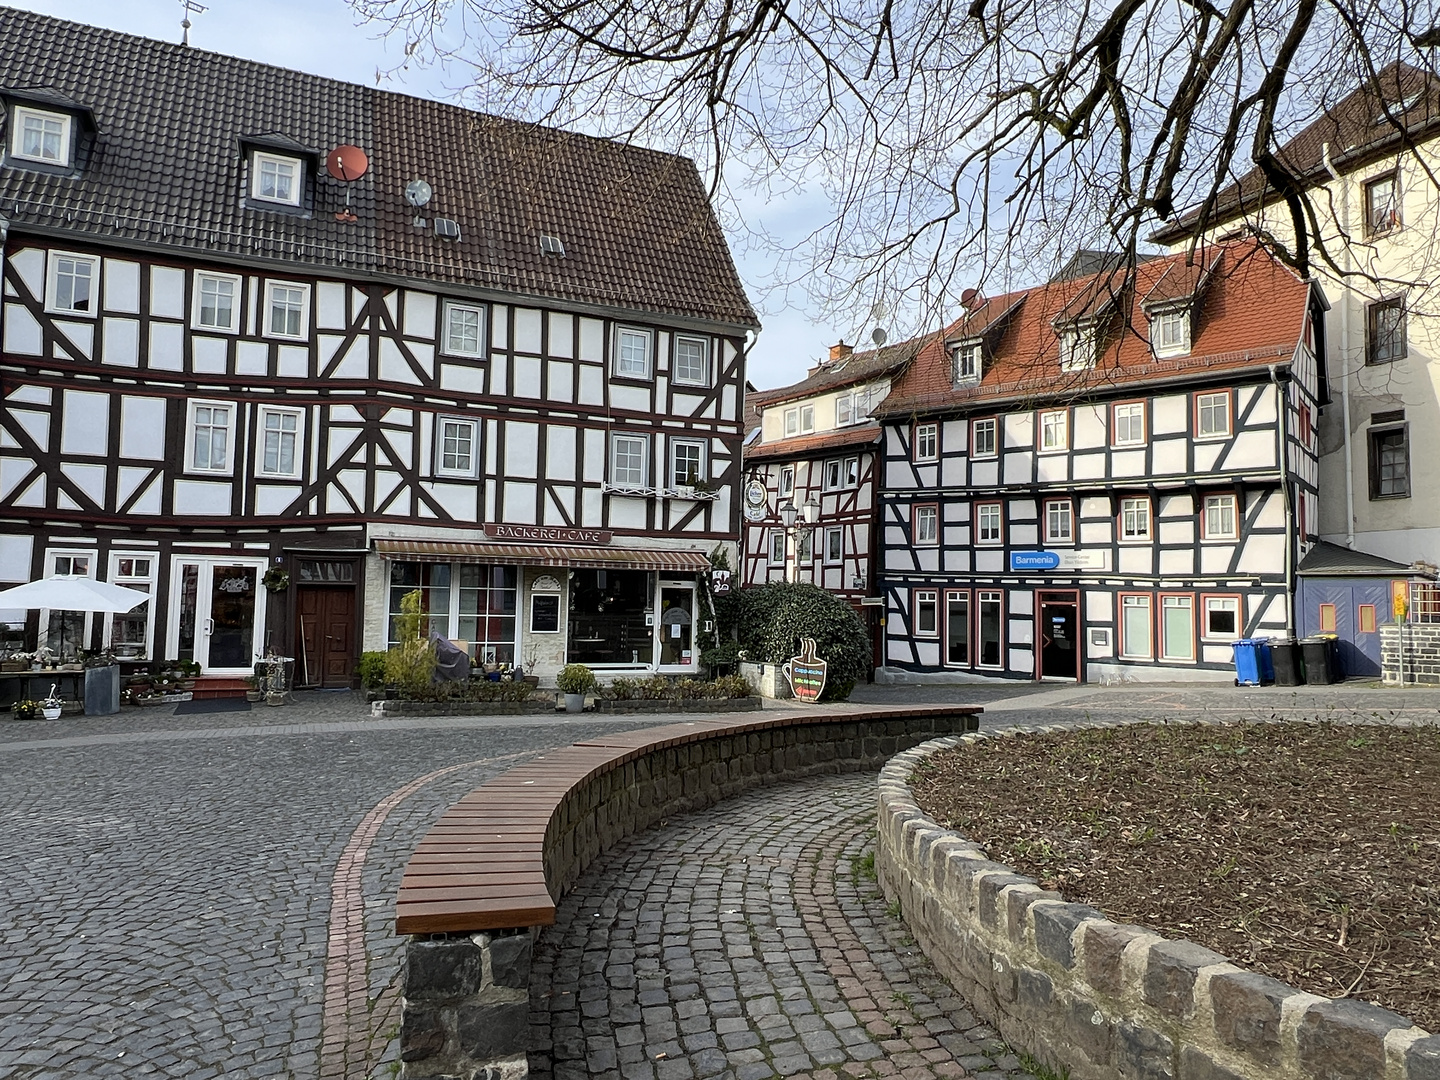 Laubach Marktplatz 